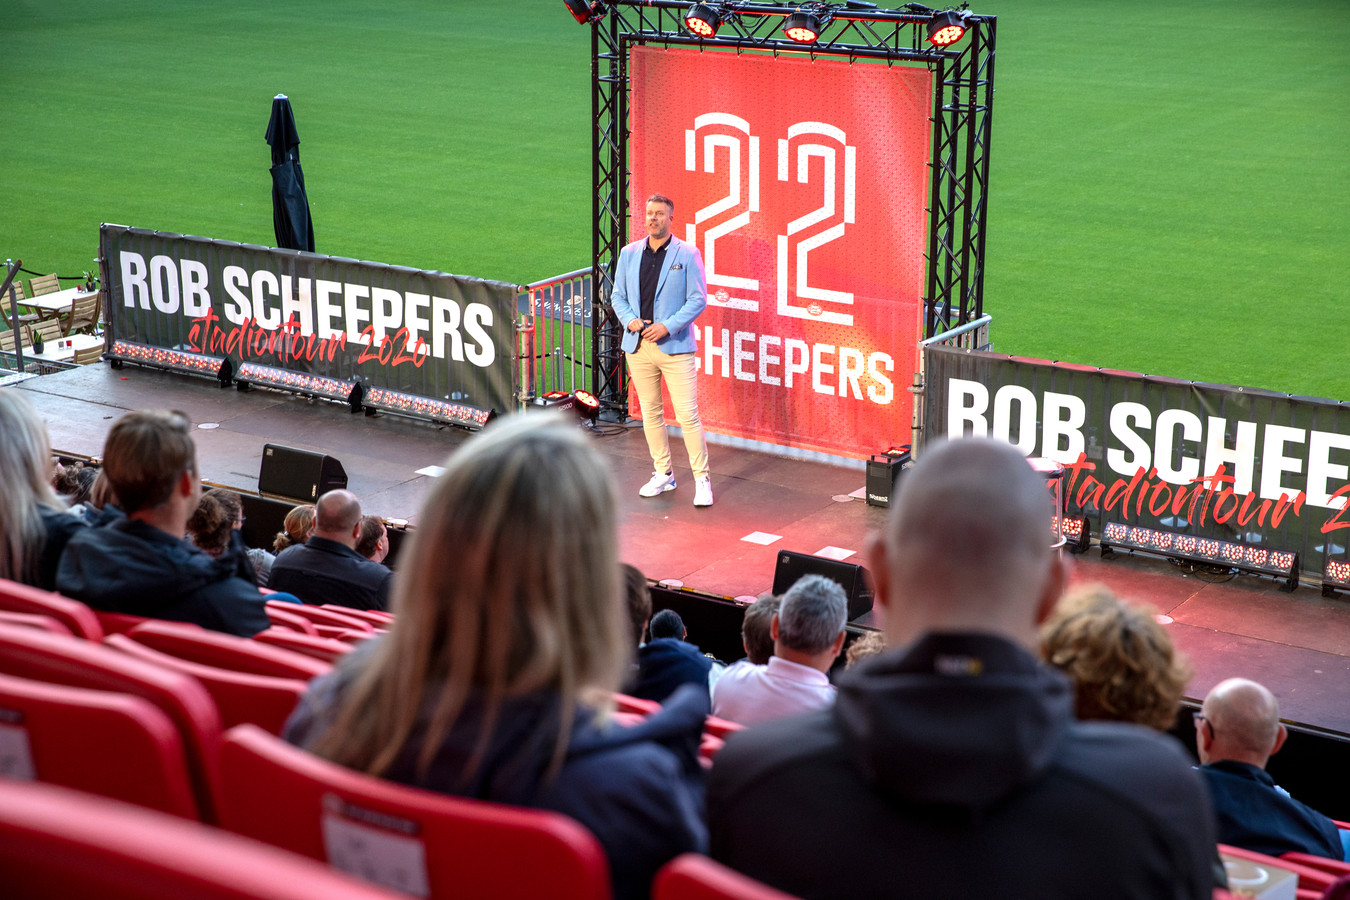 Rob Scheepers trapt zijn ‘Stadiontour 2020' af